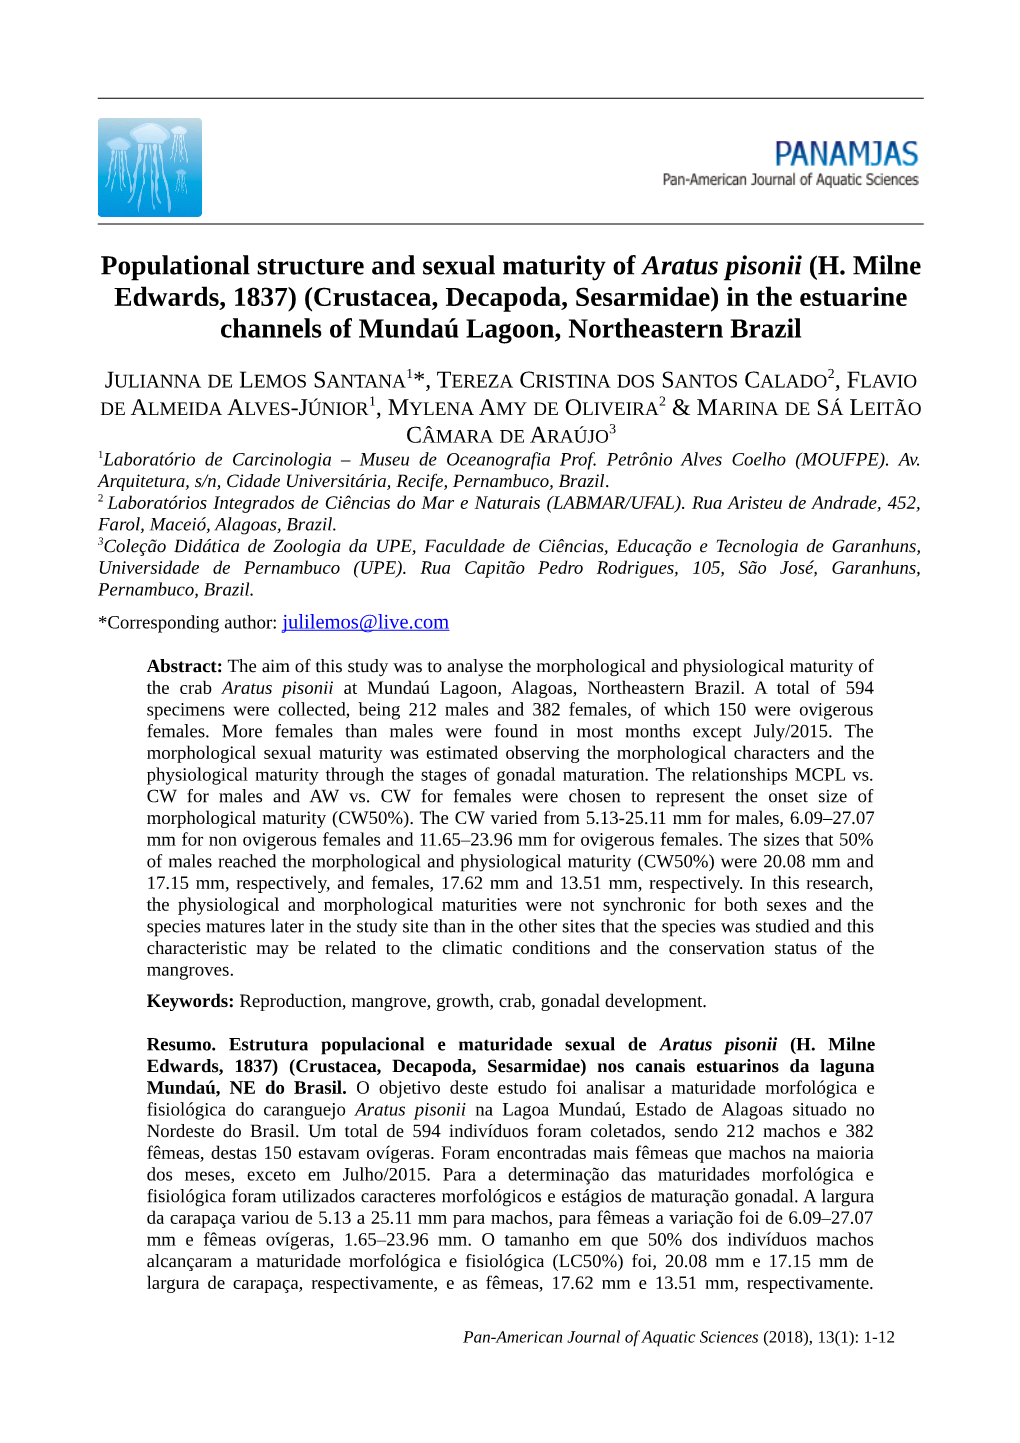 Populational Structure and Sexual Maturity of Aratus Pisonii (H. Milne